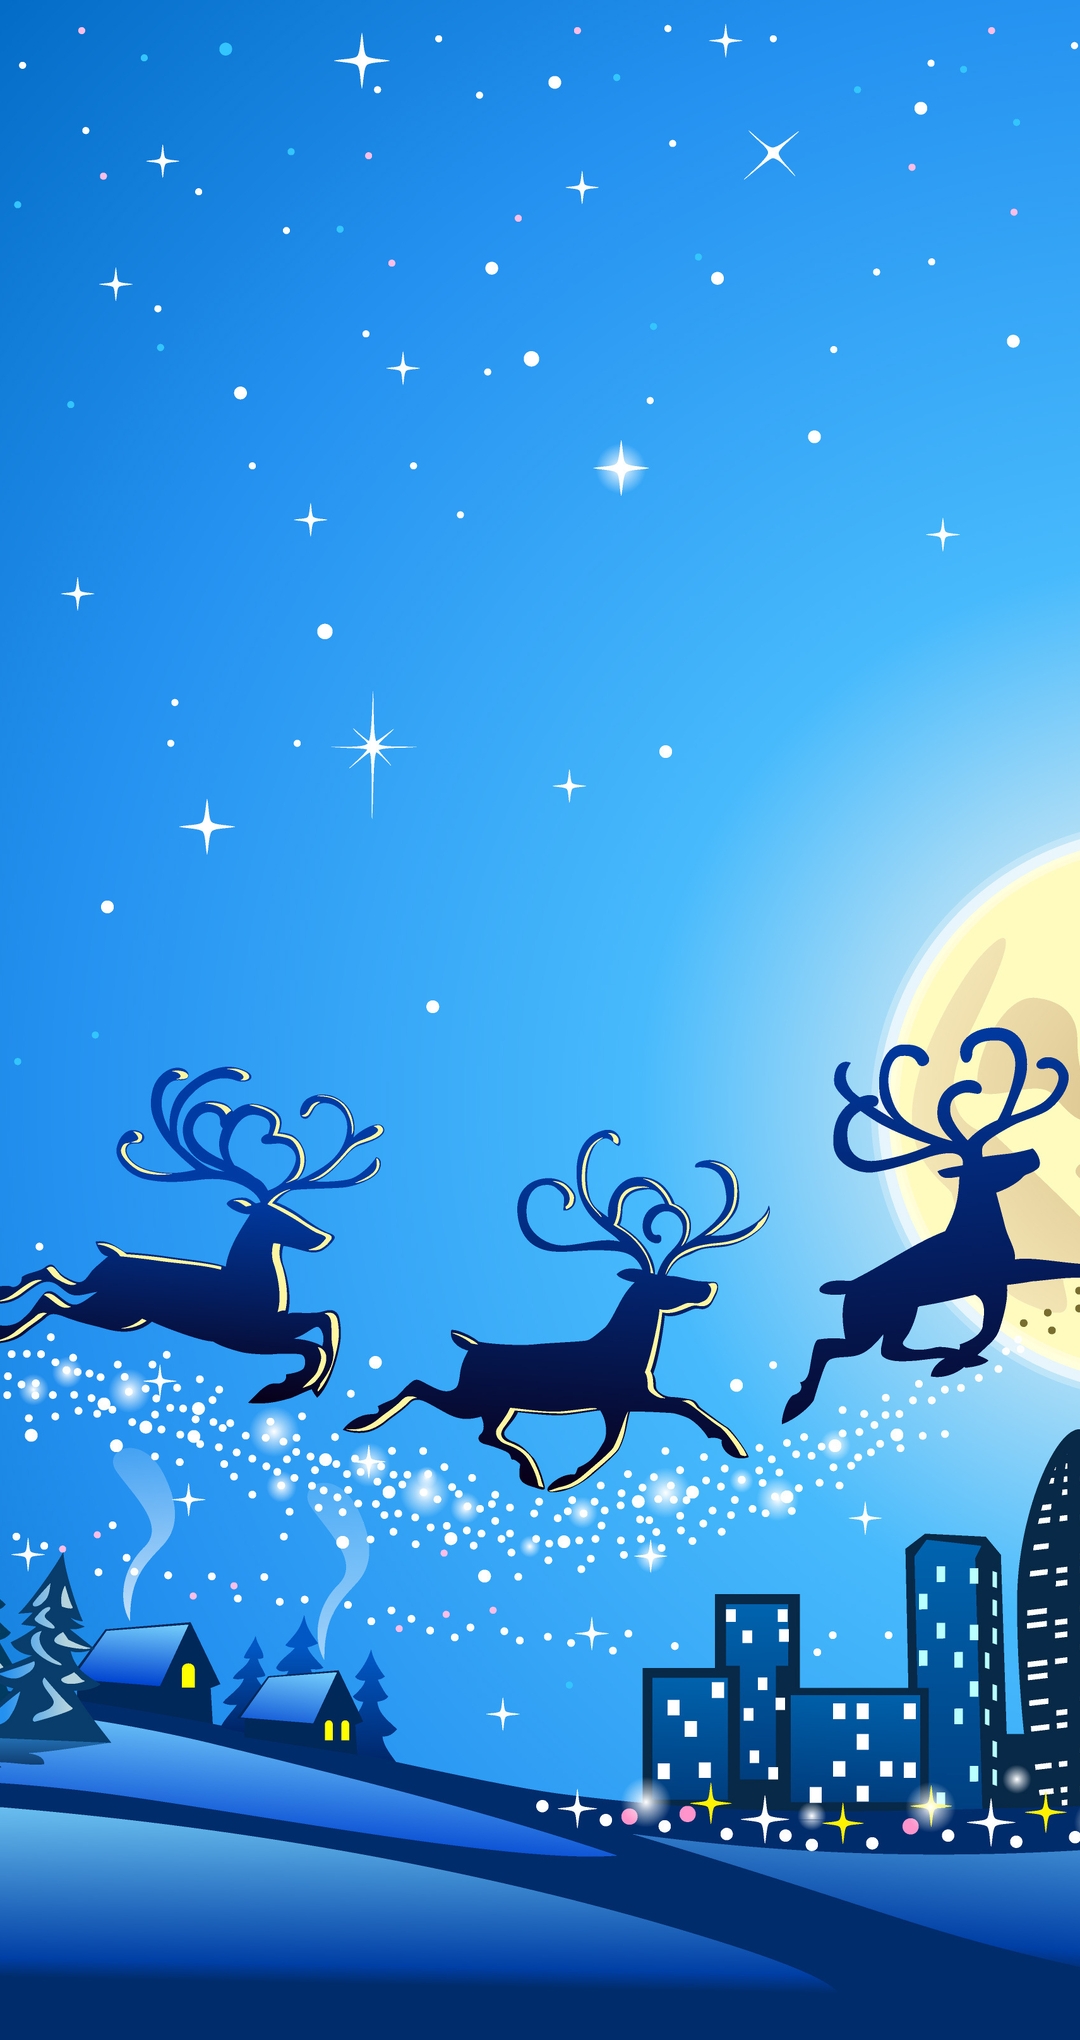 Image: Santa Claus, reindeer, sleigh, night, moon, winter, christmas, city, trees